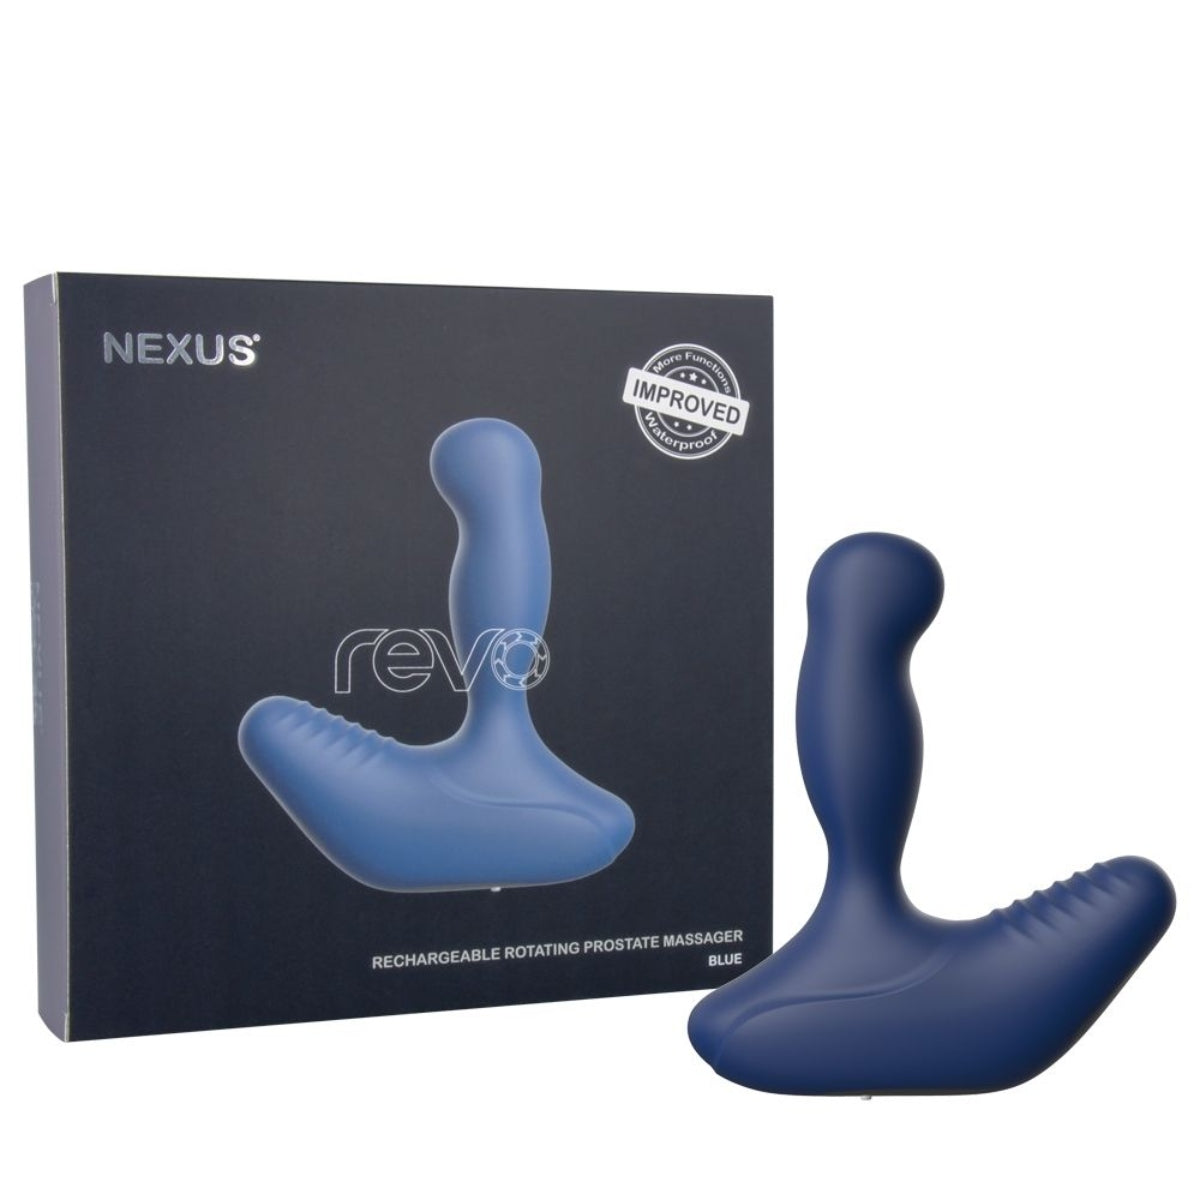 Nexus Revo Rechargeable Rotating Prostate Massager Blue